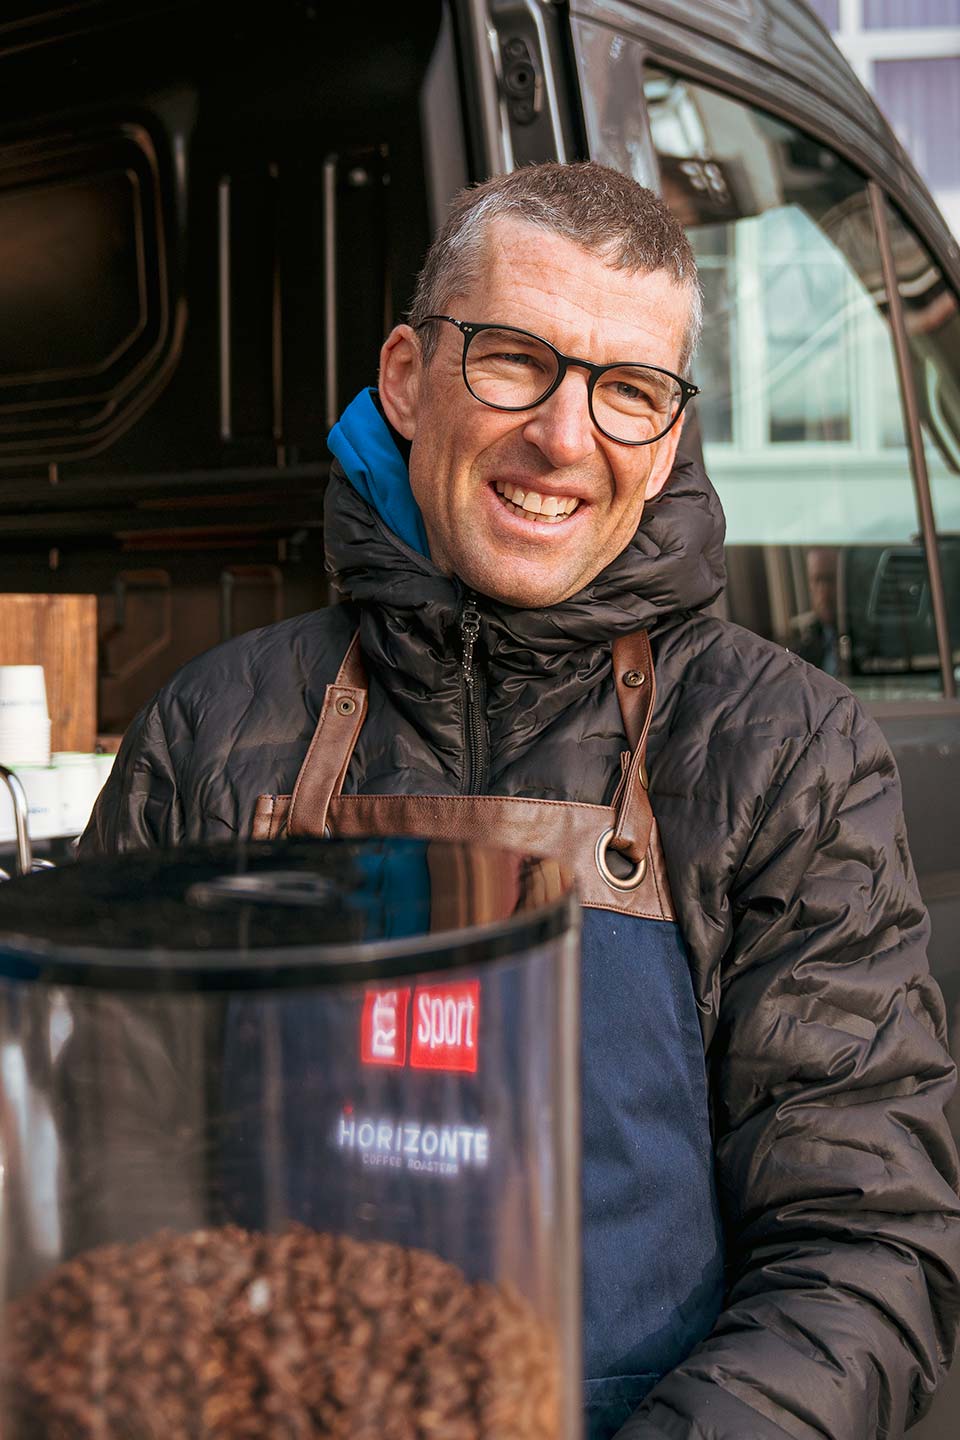 HORIZONTE COFFEE ROASTERS クリストフ・サウザー